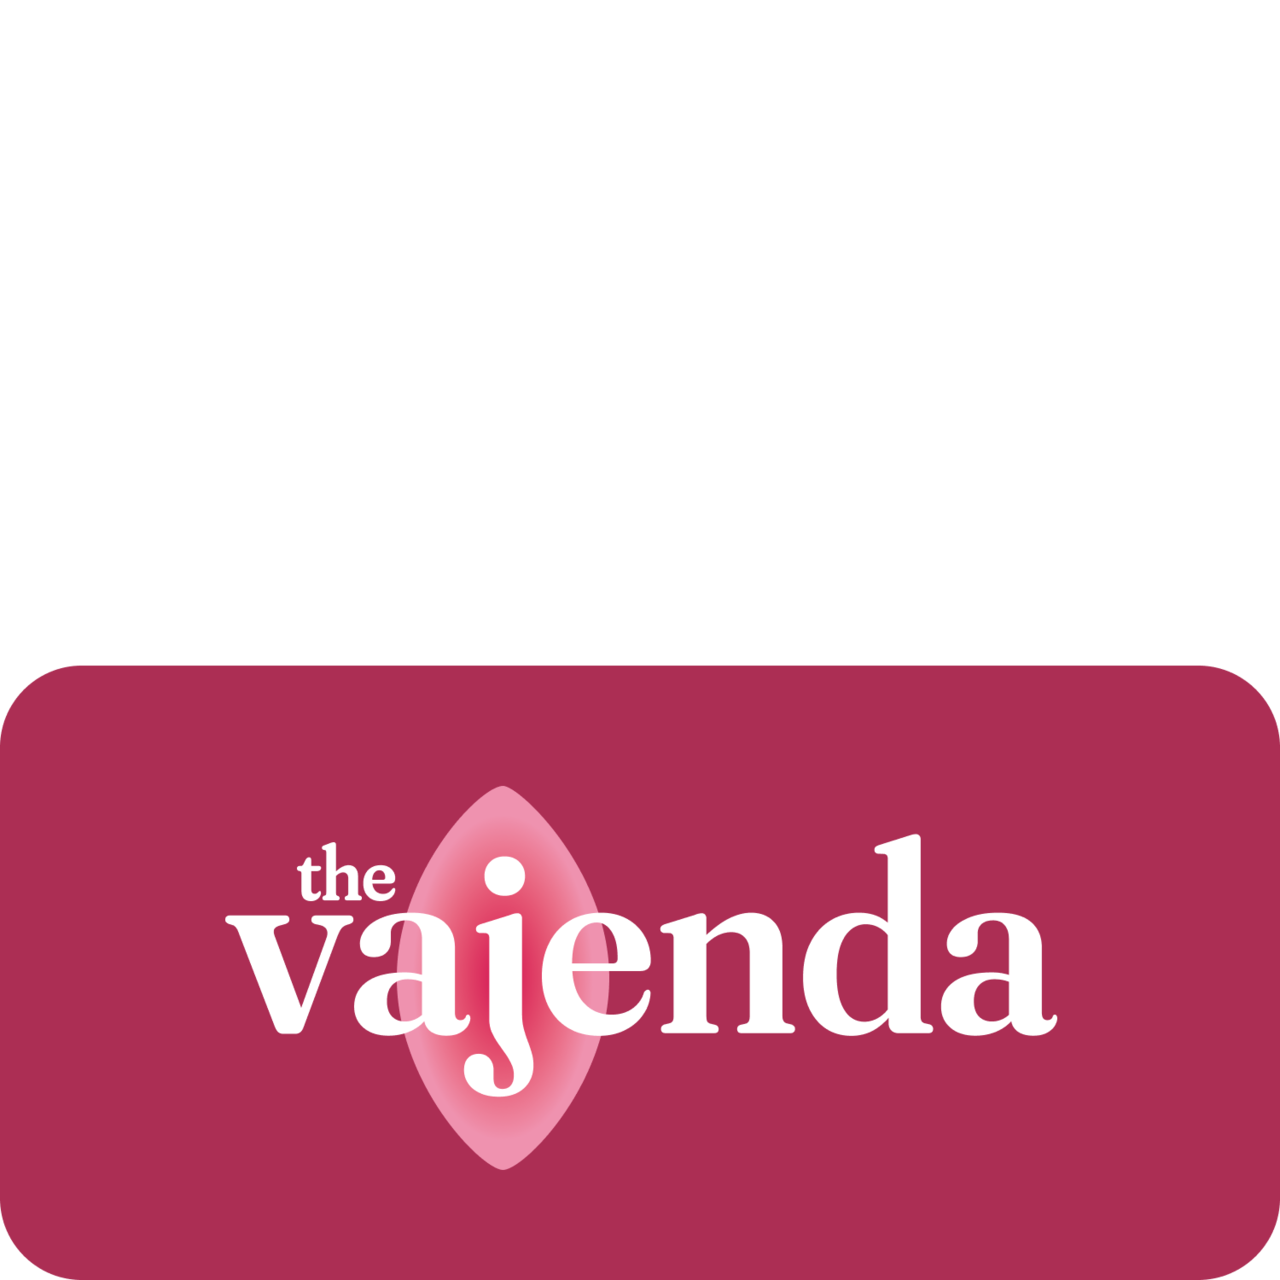 The Vajenda